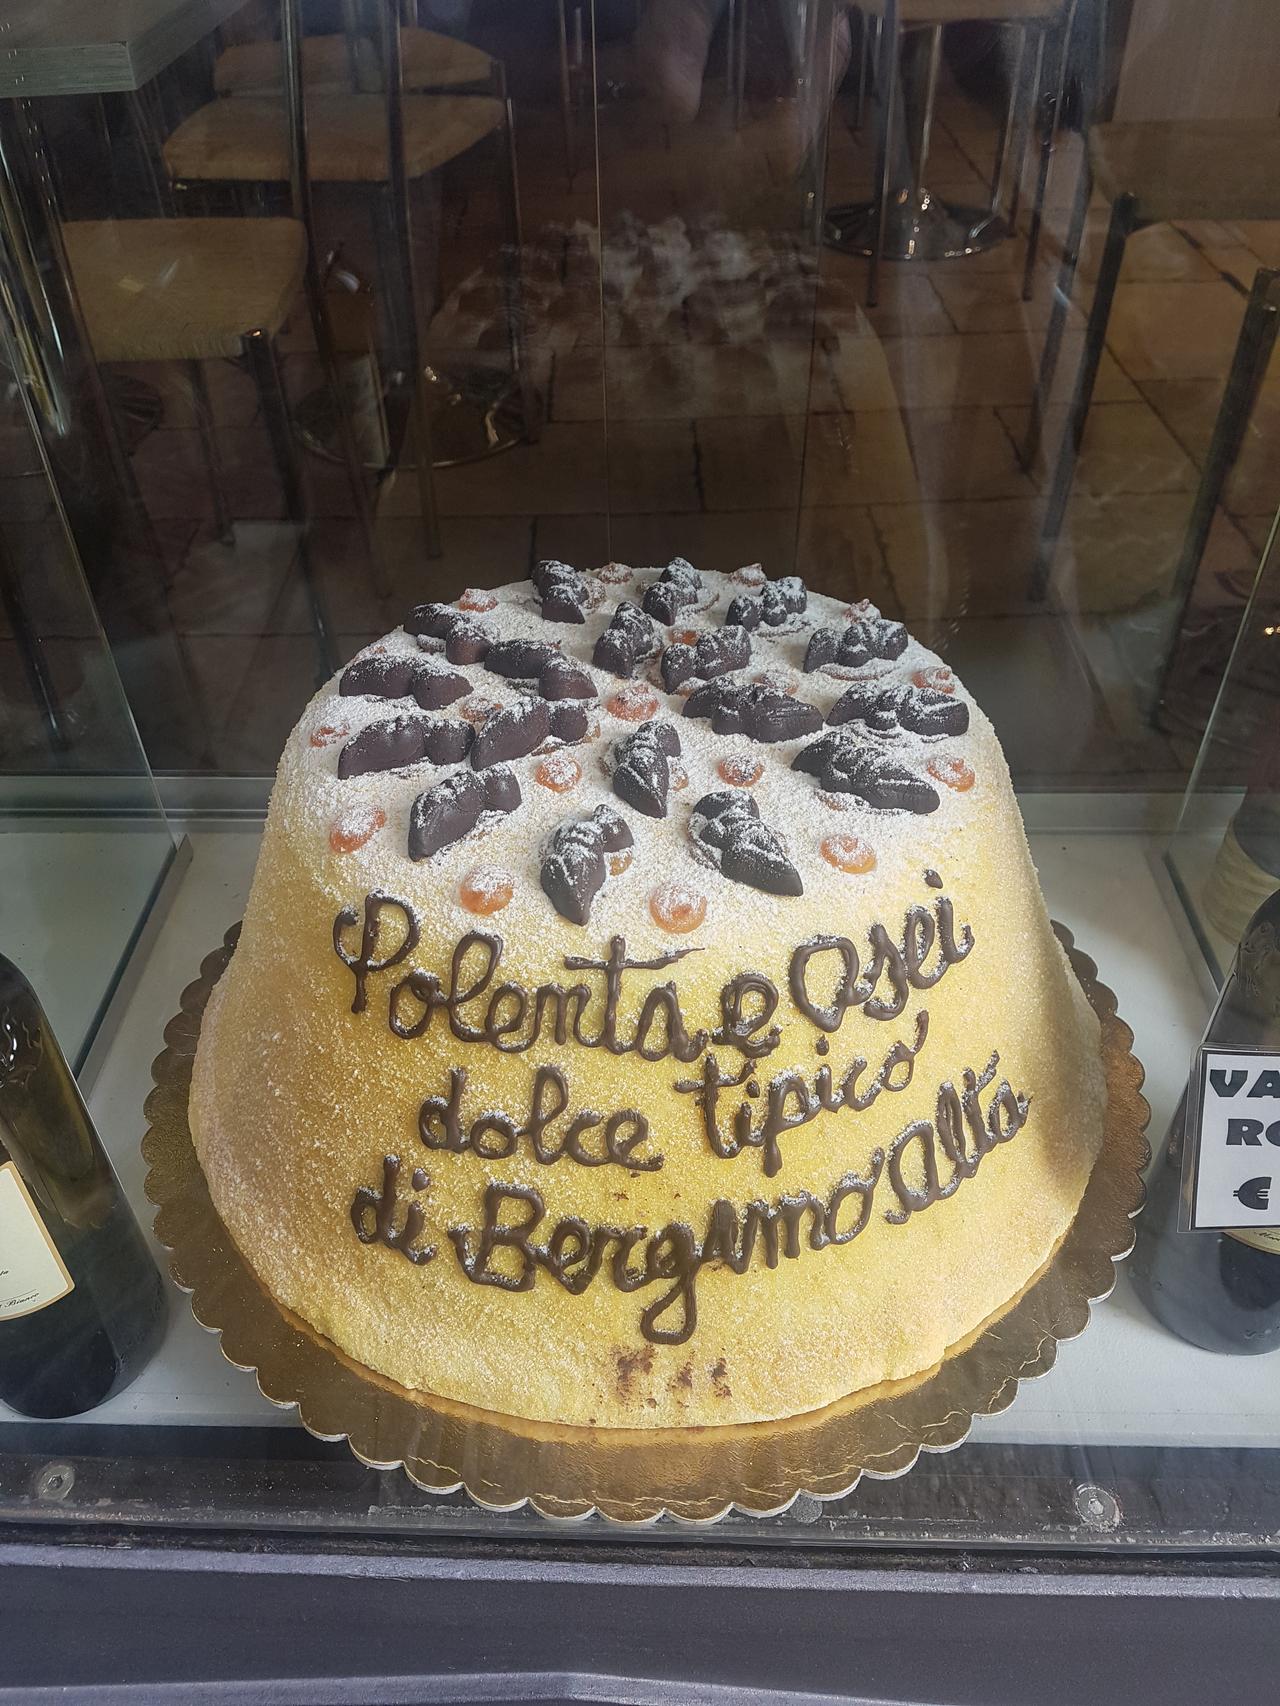 Bergamo polenta e osei